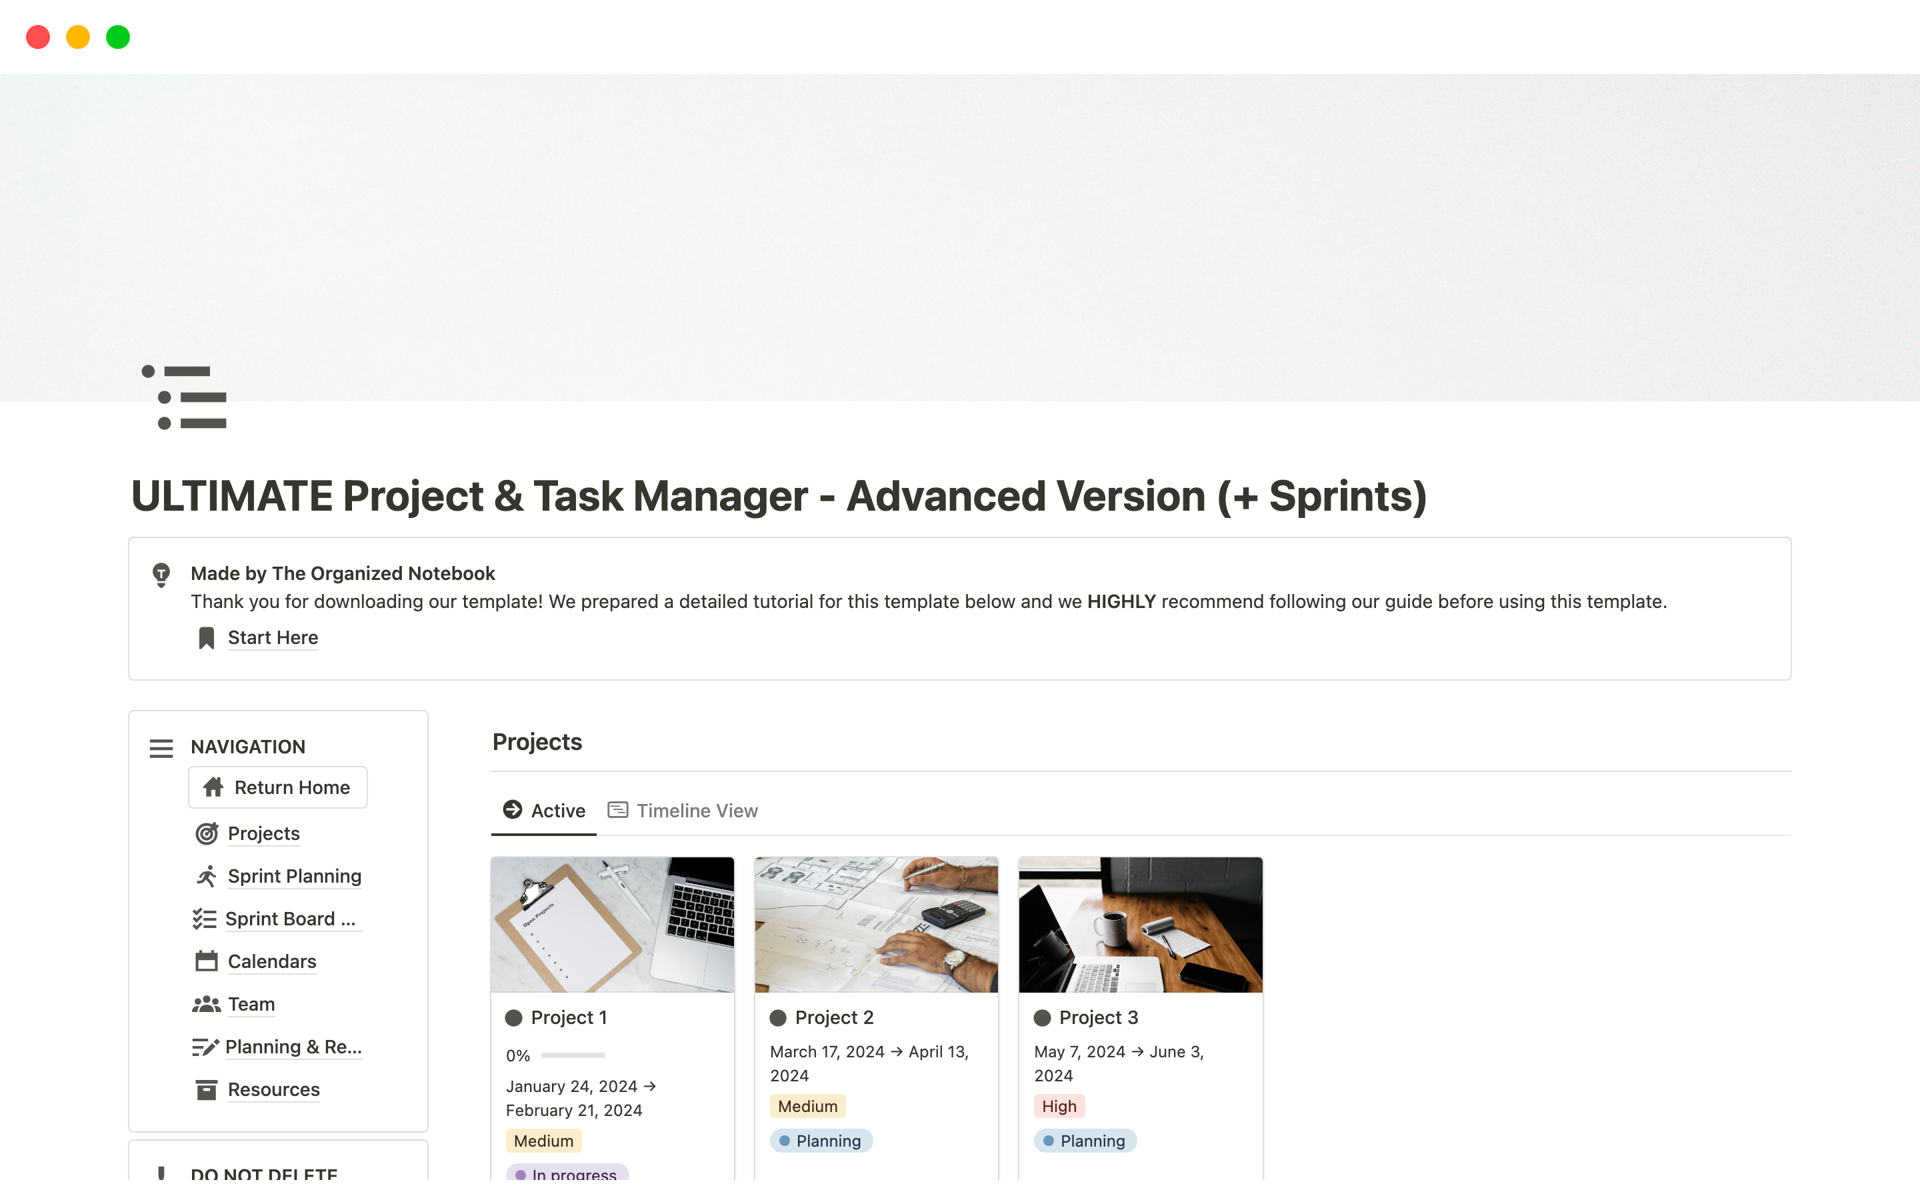 ULTIMATE Project & Task Manager - Advanced Version님의 템플릿 미리보기